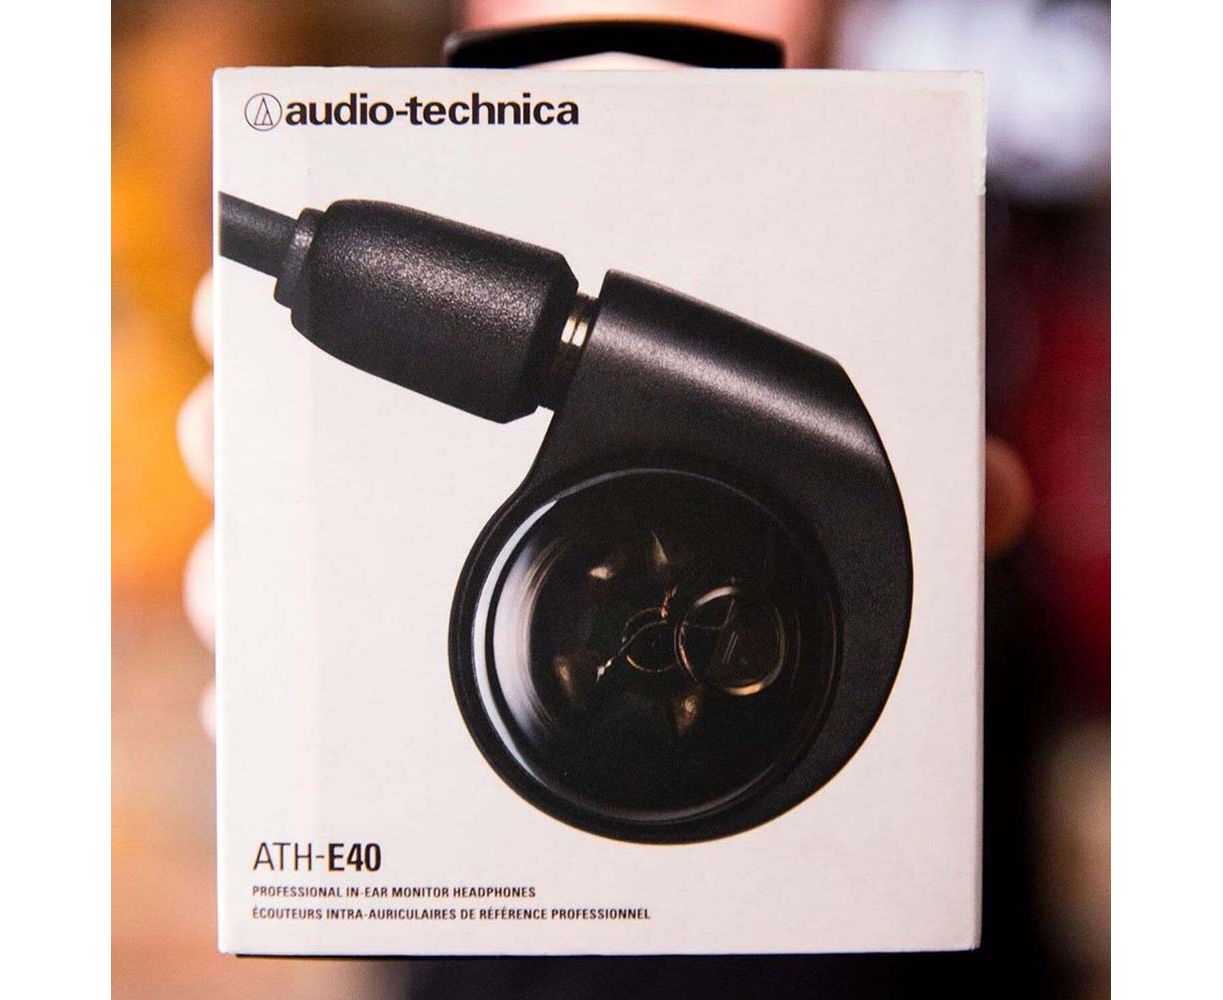 Audio-technica ath-es10